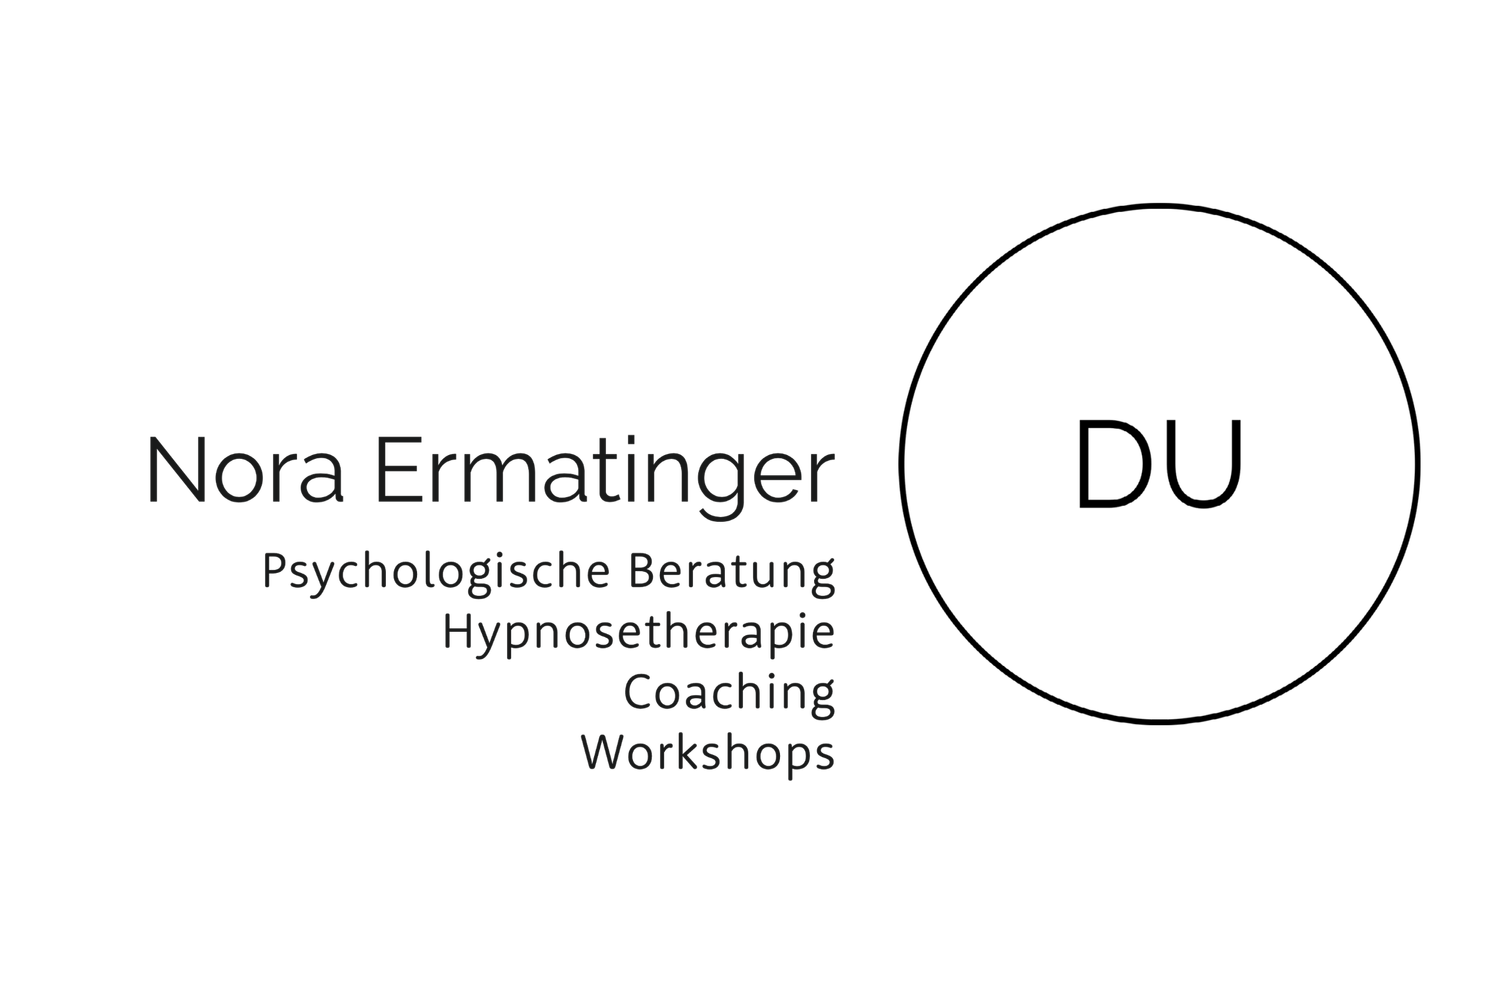 Psychologische Beratung, Hypnosetherapie, Coaching & Workshops